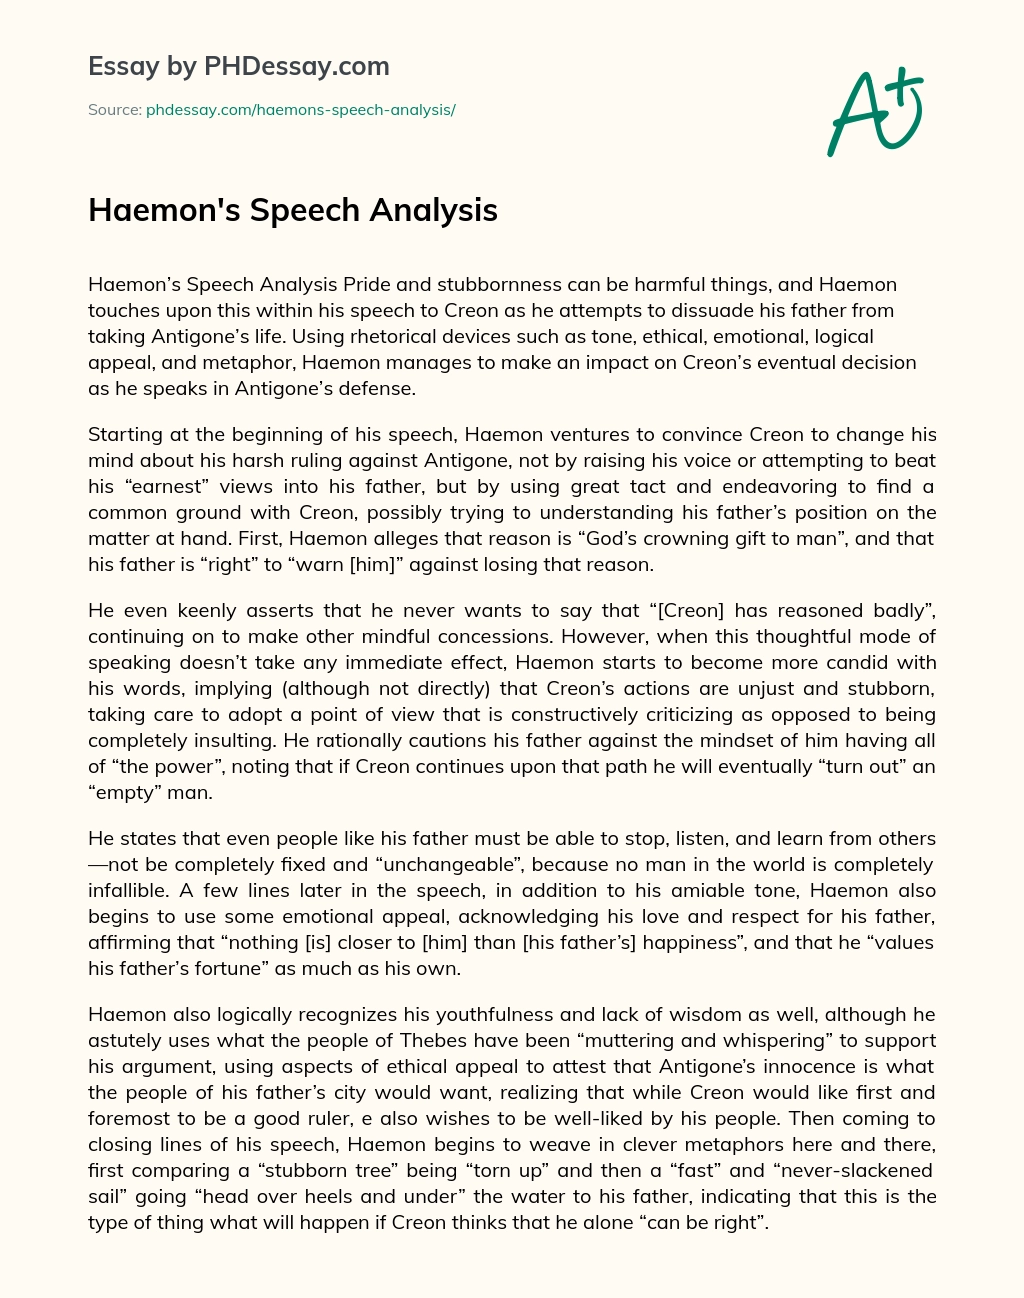 Haemon’s Speech Analysis essay